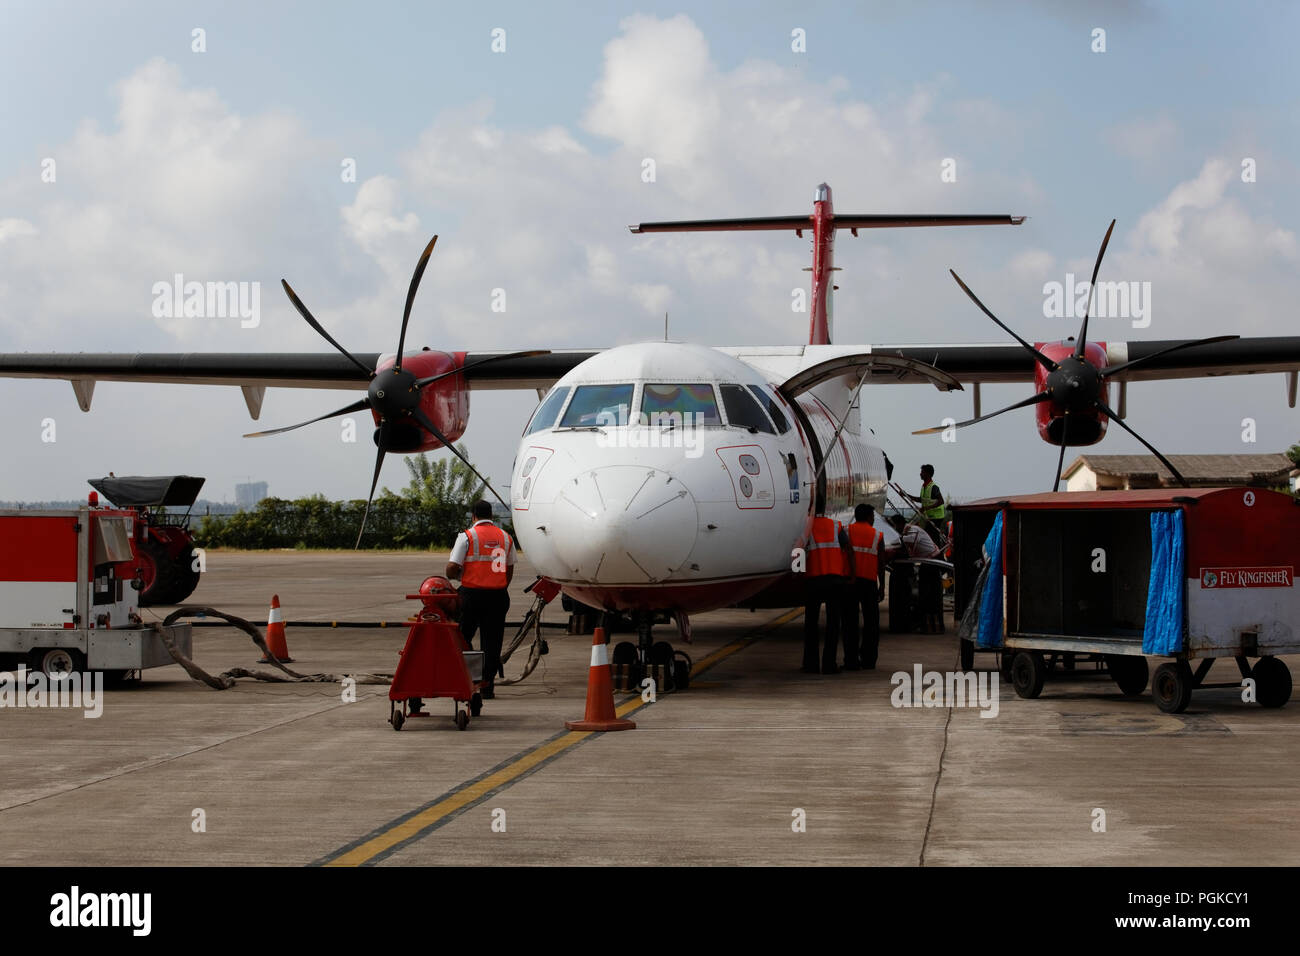 Aircraft of Air India and Kingfisher airline at the Mangalore airport, Karnataka, India. Stock Photo